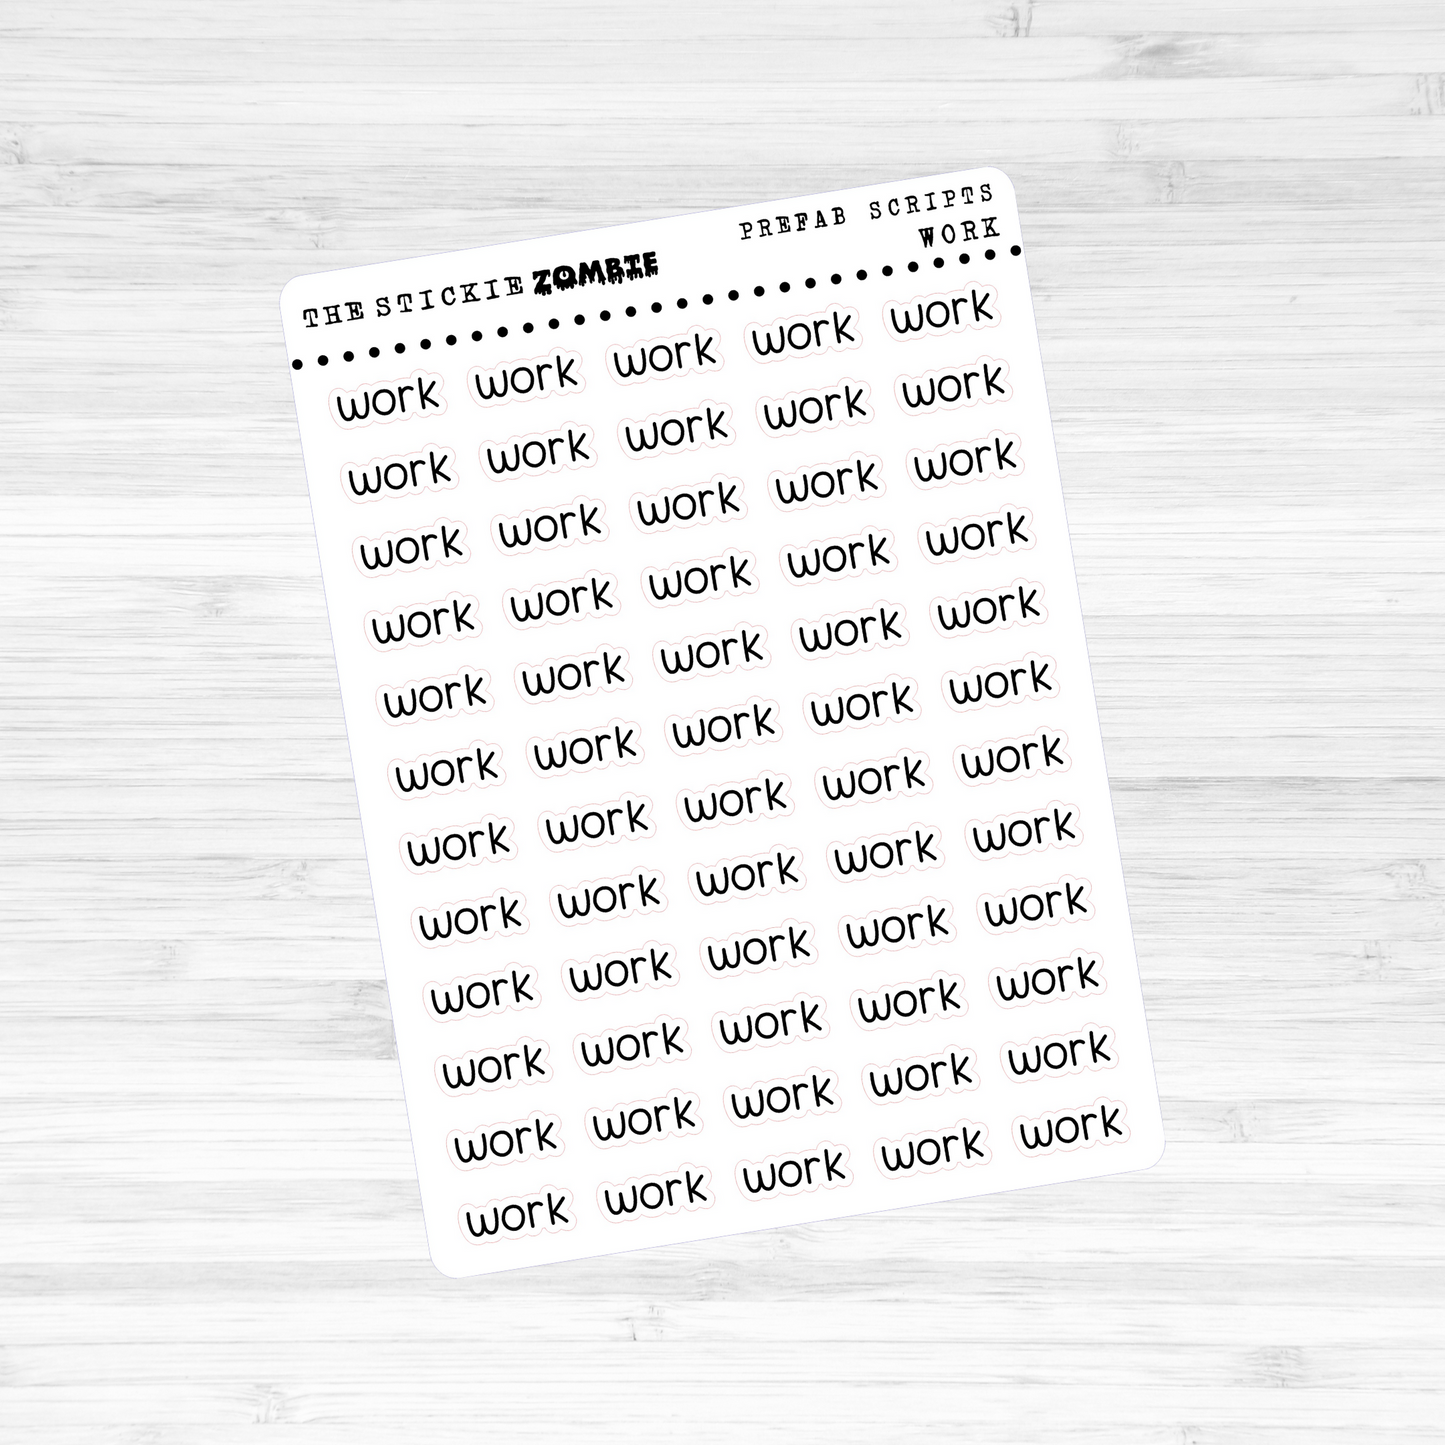 Script Words / Work